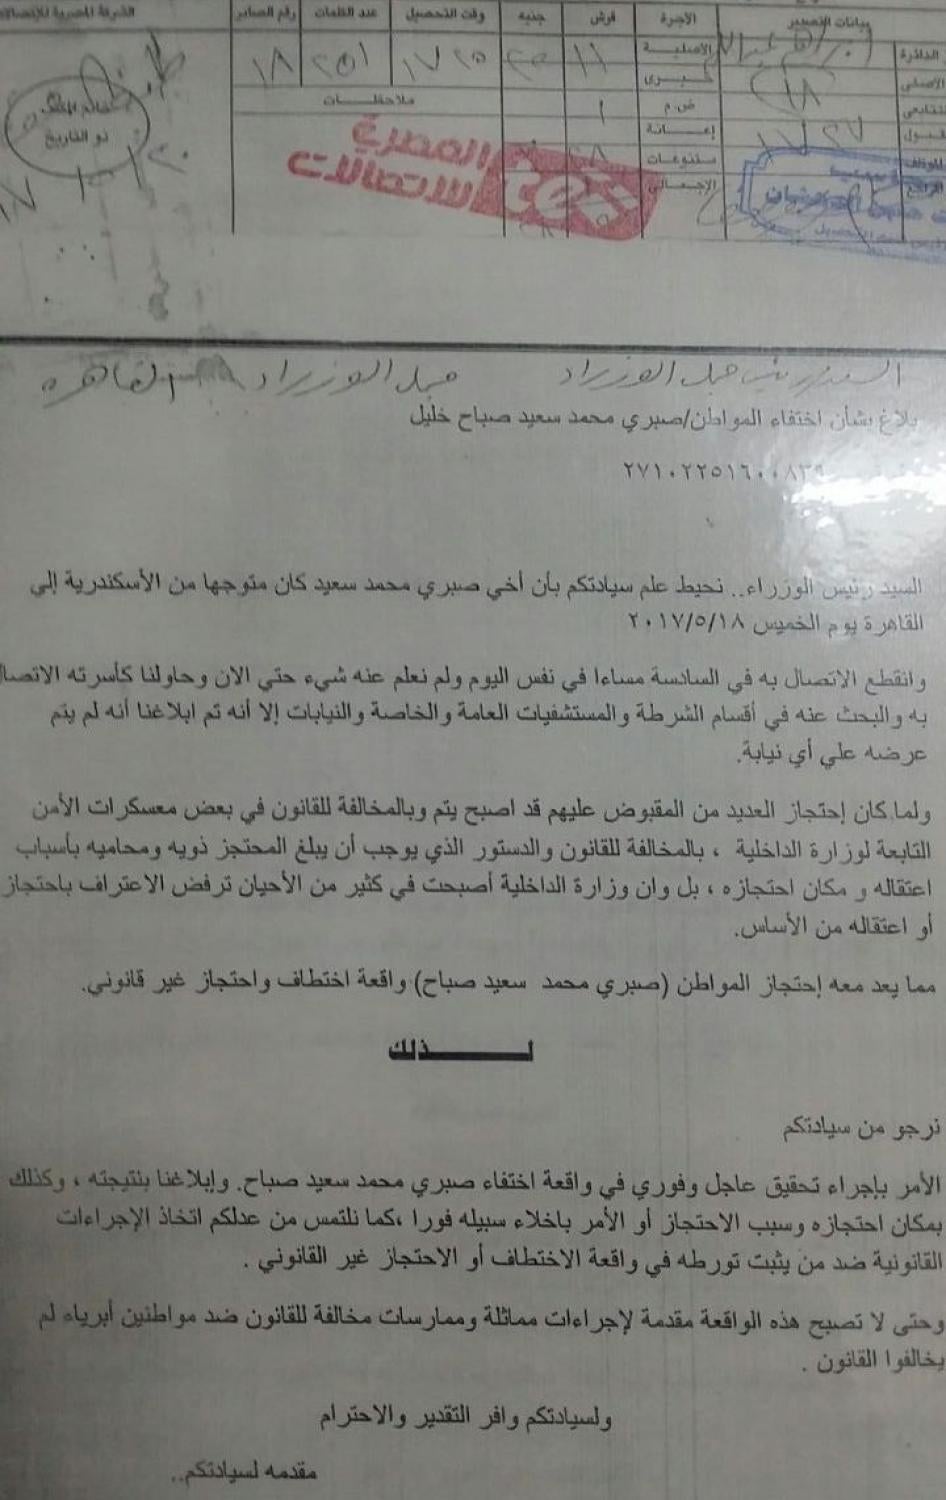 Copy of a telegram written in Arabic